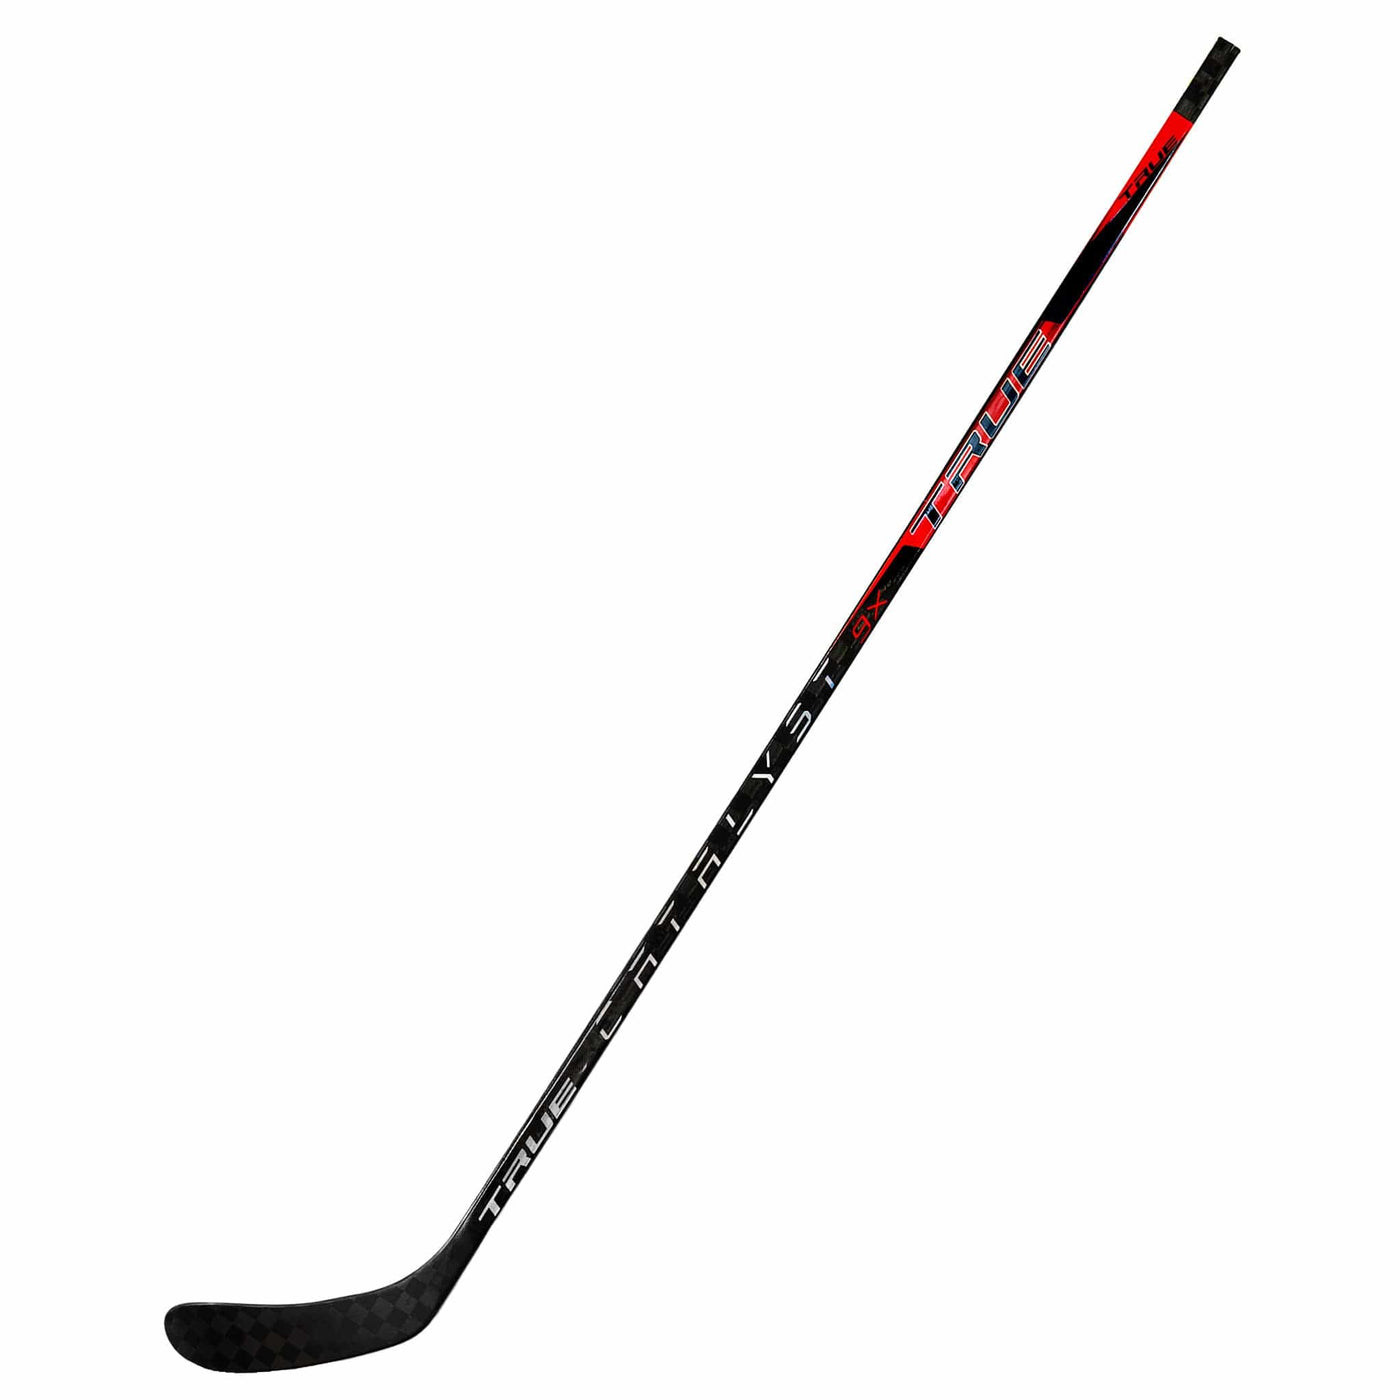 TRUE Catalyst 9X Pro Stock Senior Hockey Stick - Thomas Chabot - The Hockey Shop Source For Sports